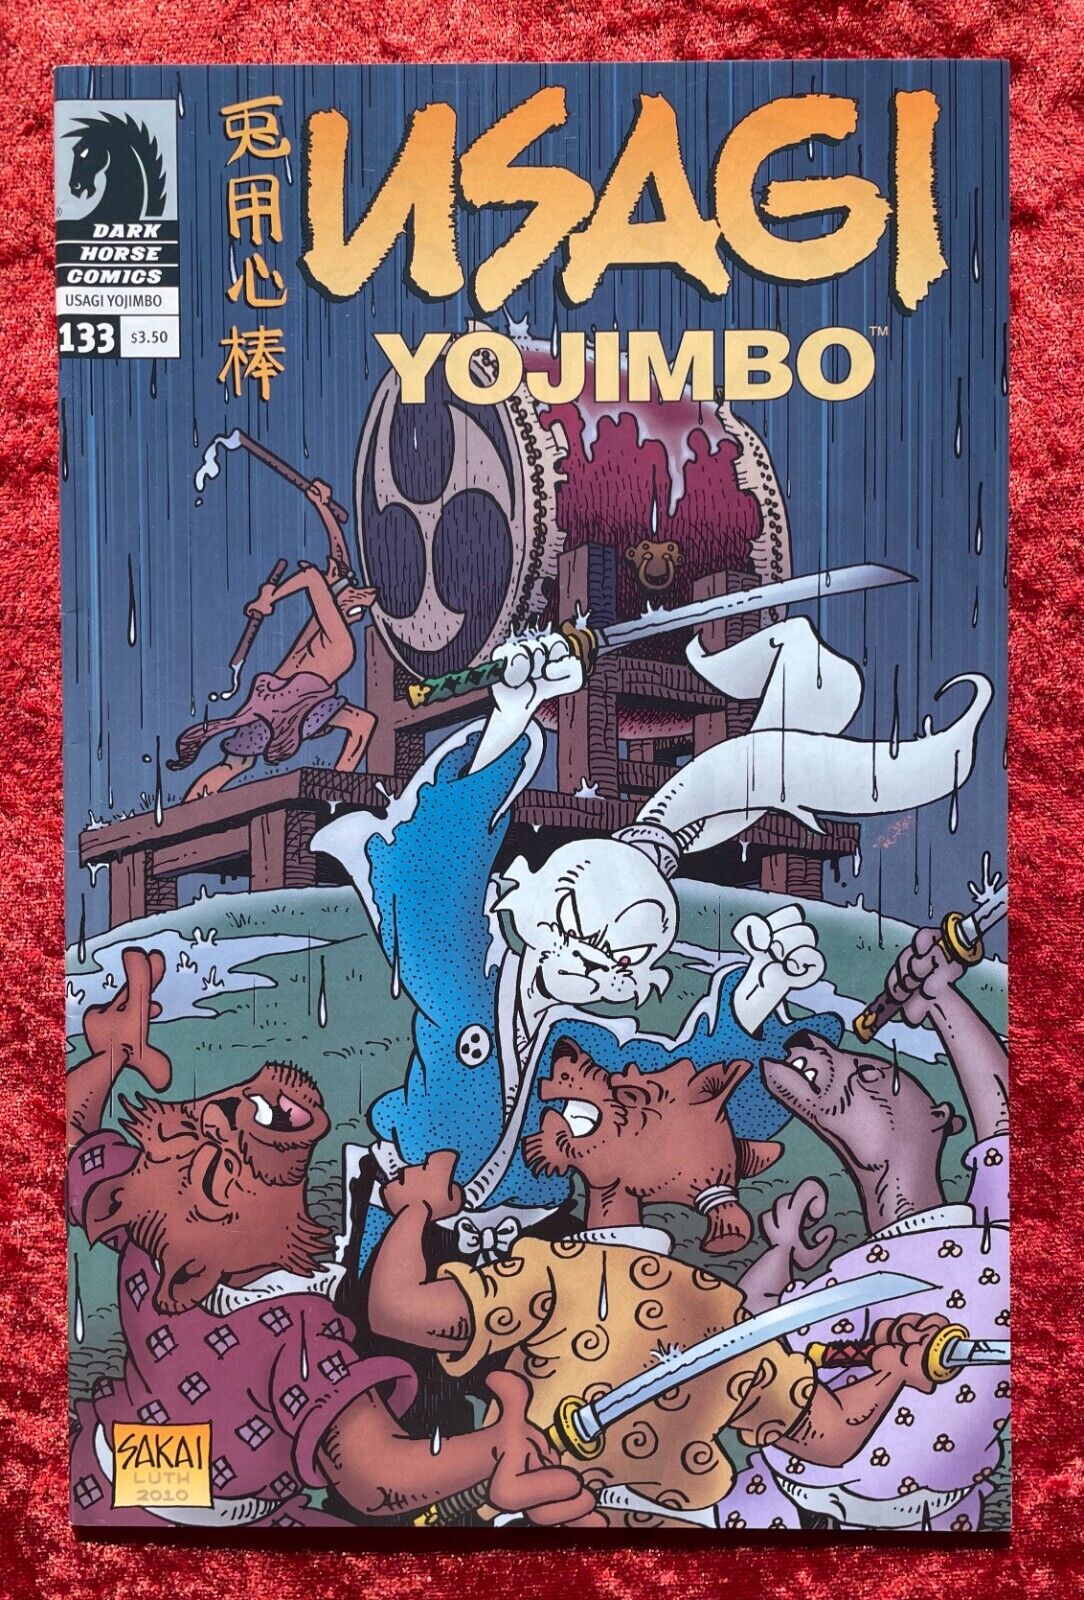 Usagi Yojimbo #133, Dark Horse, 2010; Stan Sakai